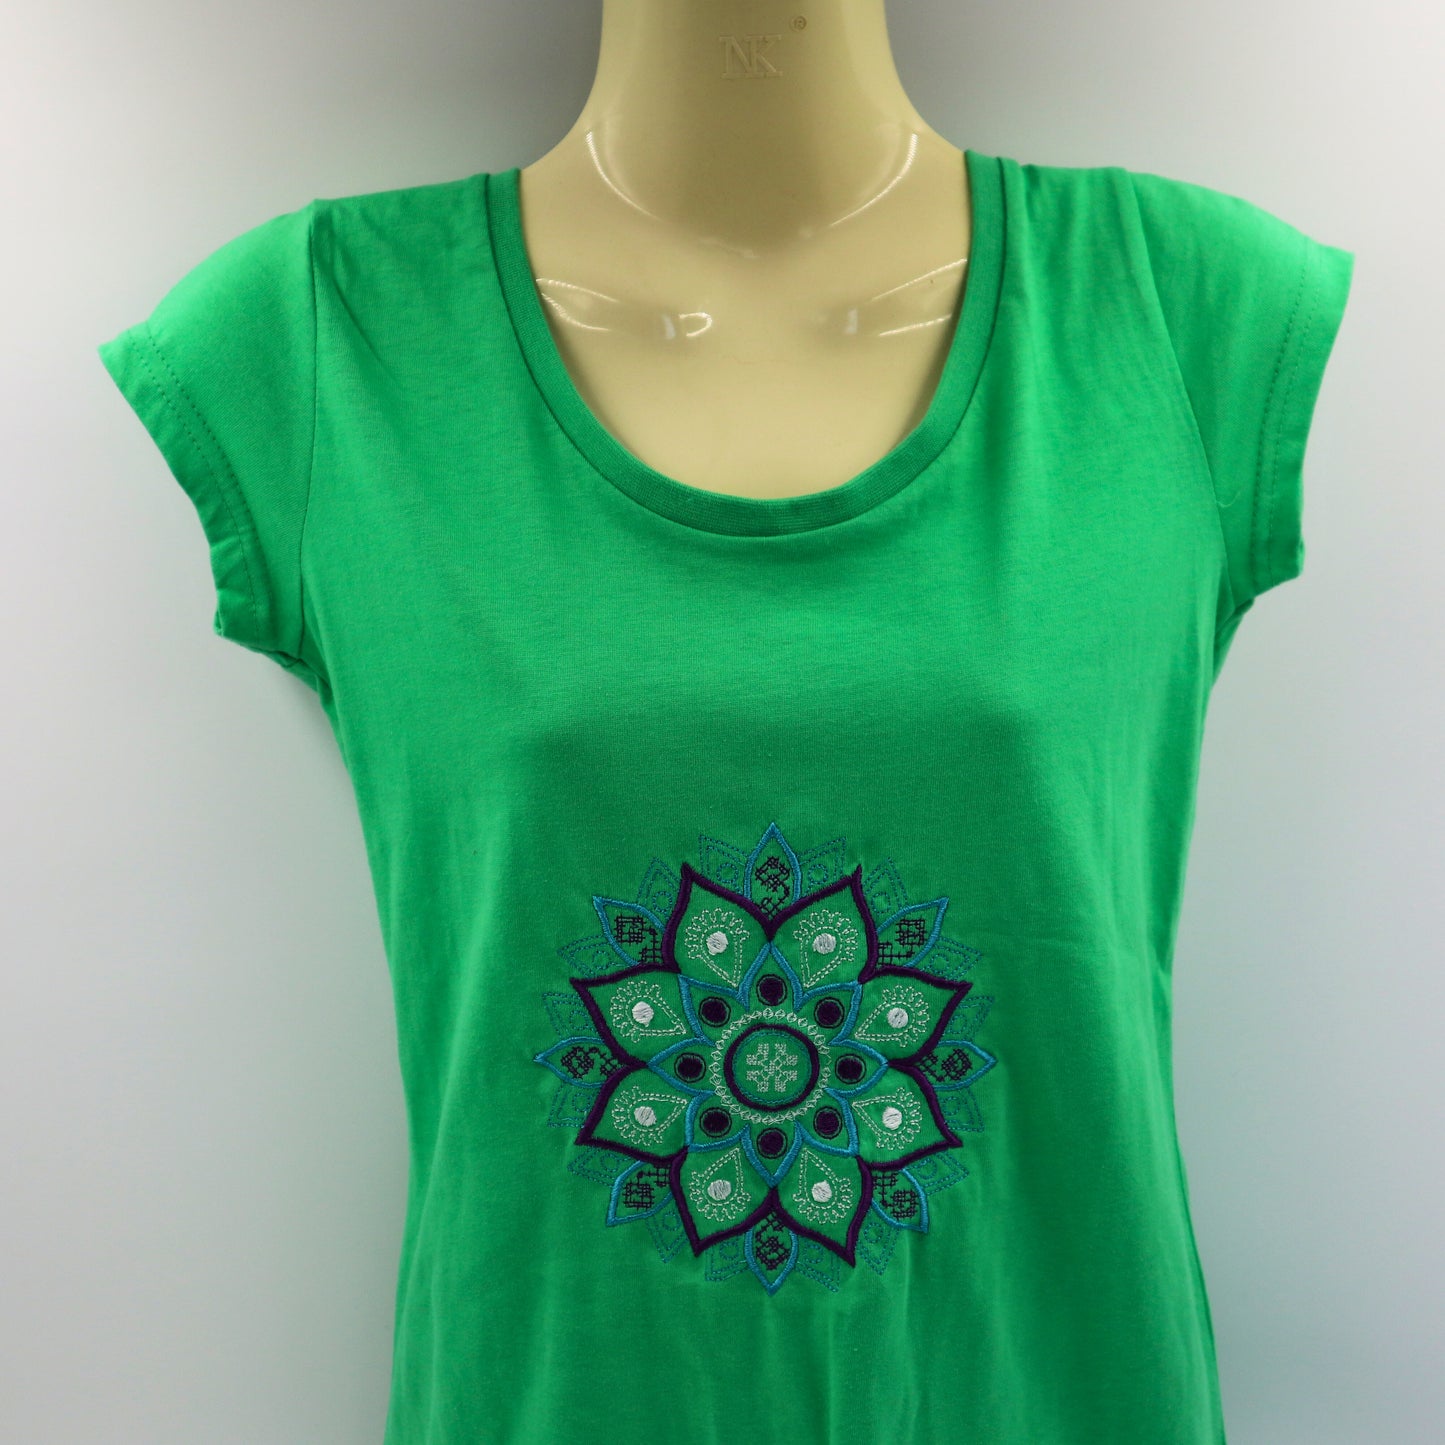 Ladies Embroidered T shirt - sizes 8 to 18 - retro mandala